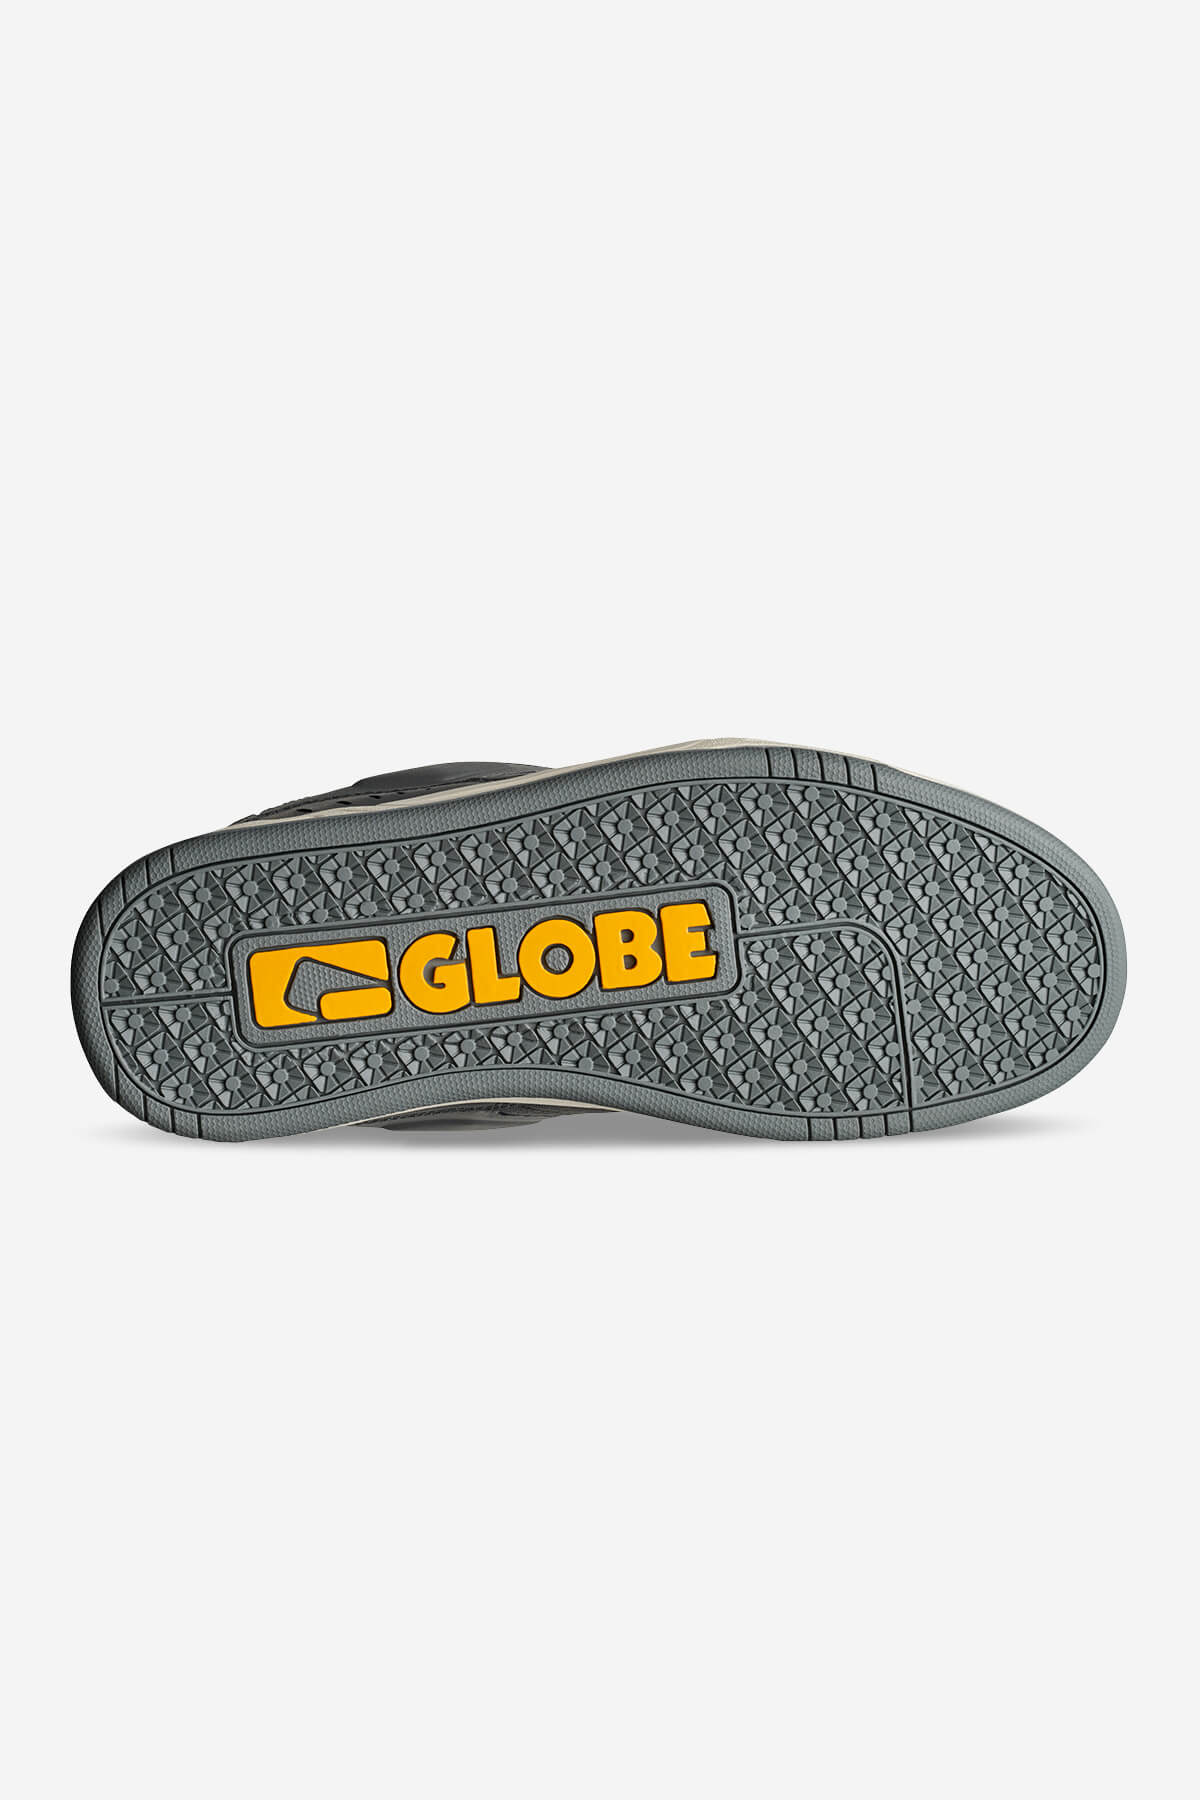 Globe - Fusion - Chumbo/Antique - skateboard Shoes